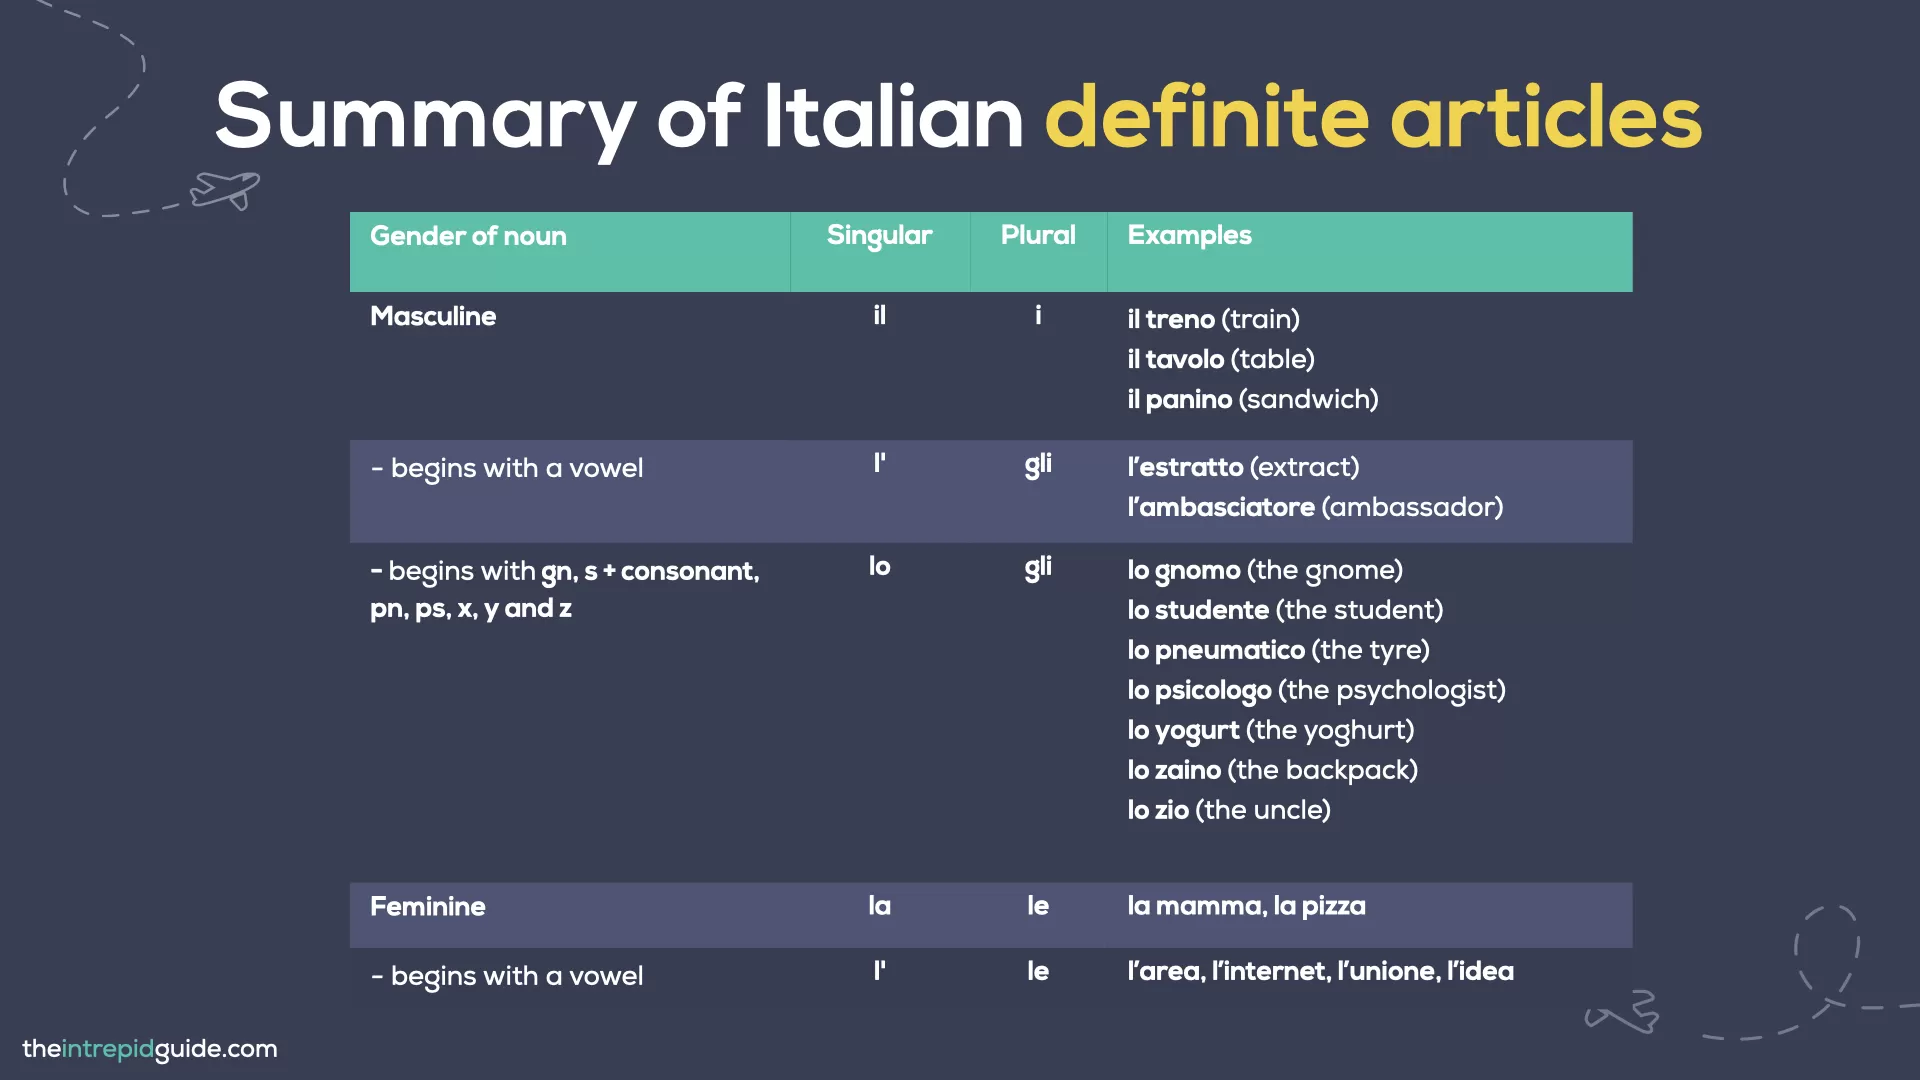 Gender of Italian nouns guide - Table of Italian Definite Articles